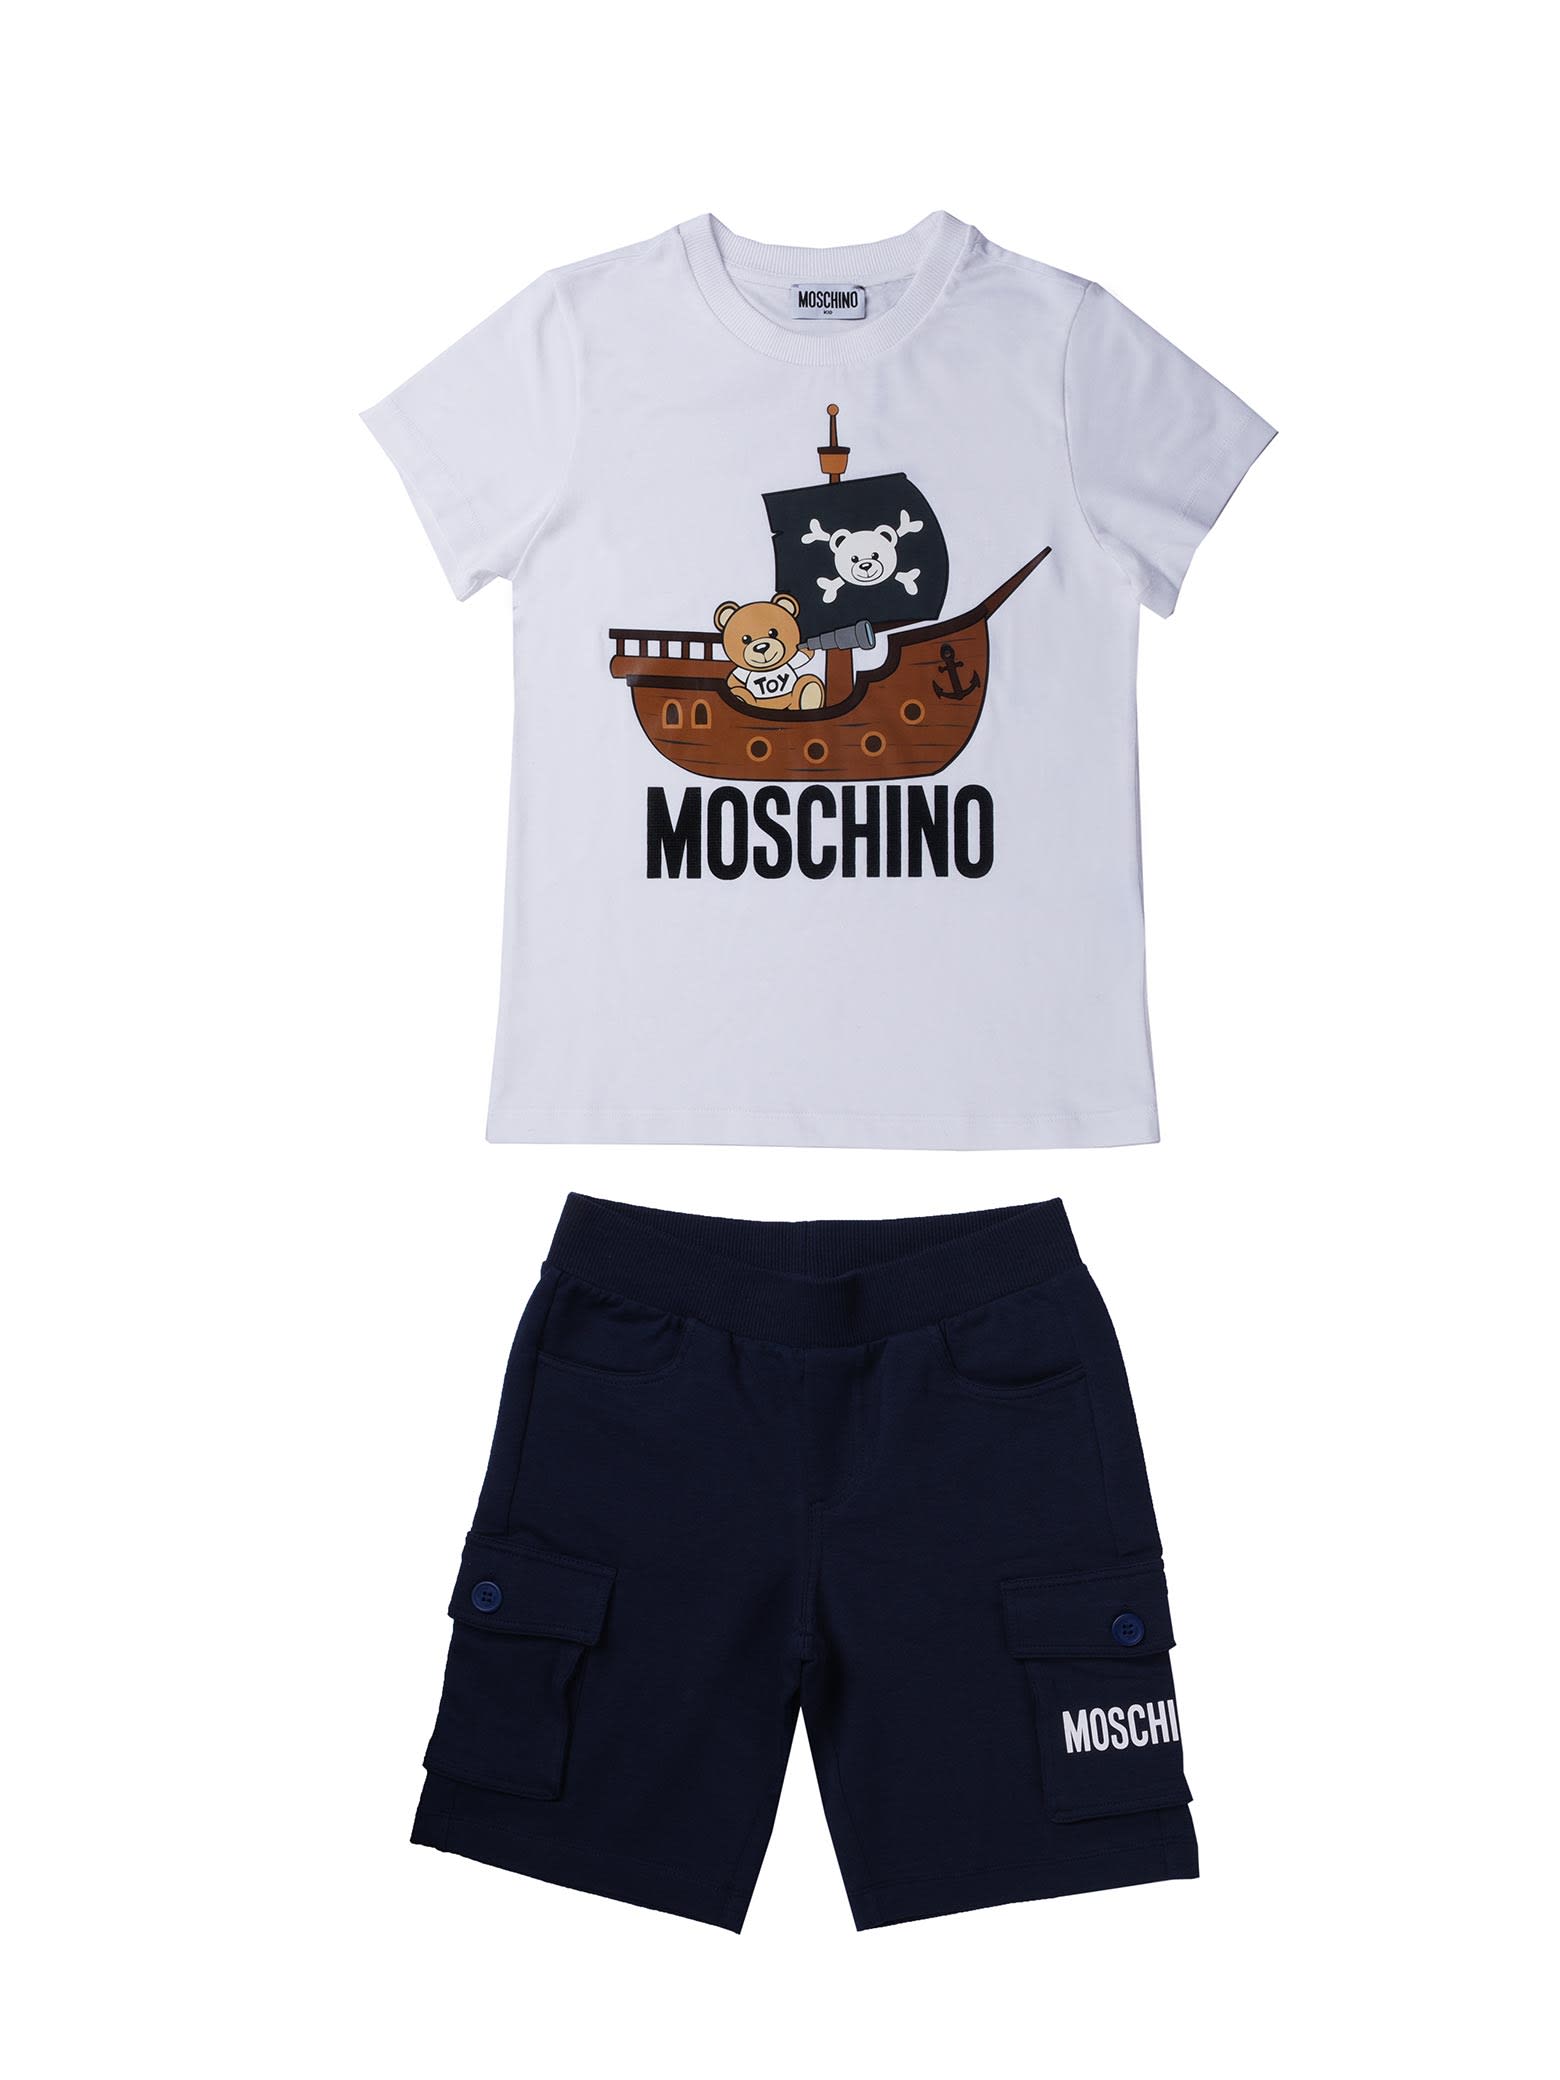 Moschino Complete White T-shirt And Bluee Bermuda